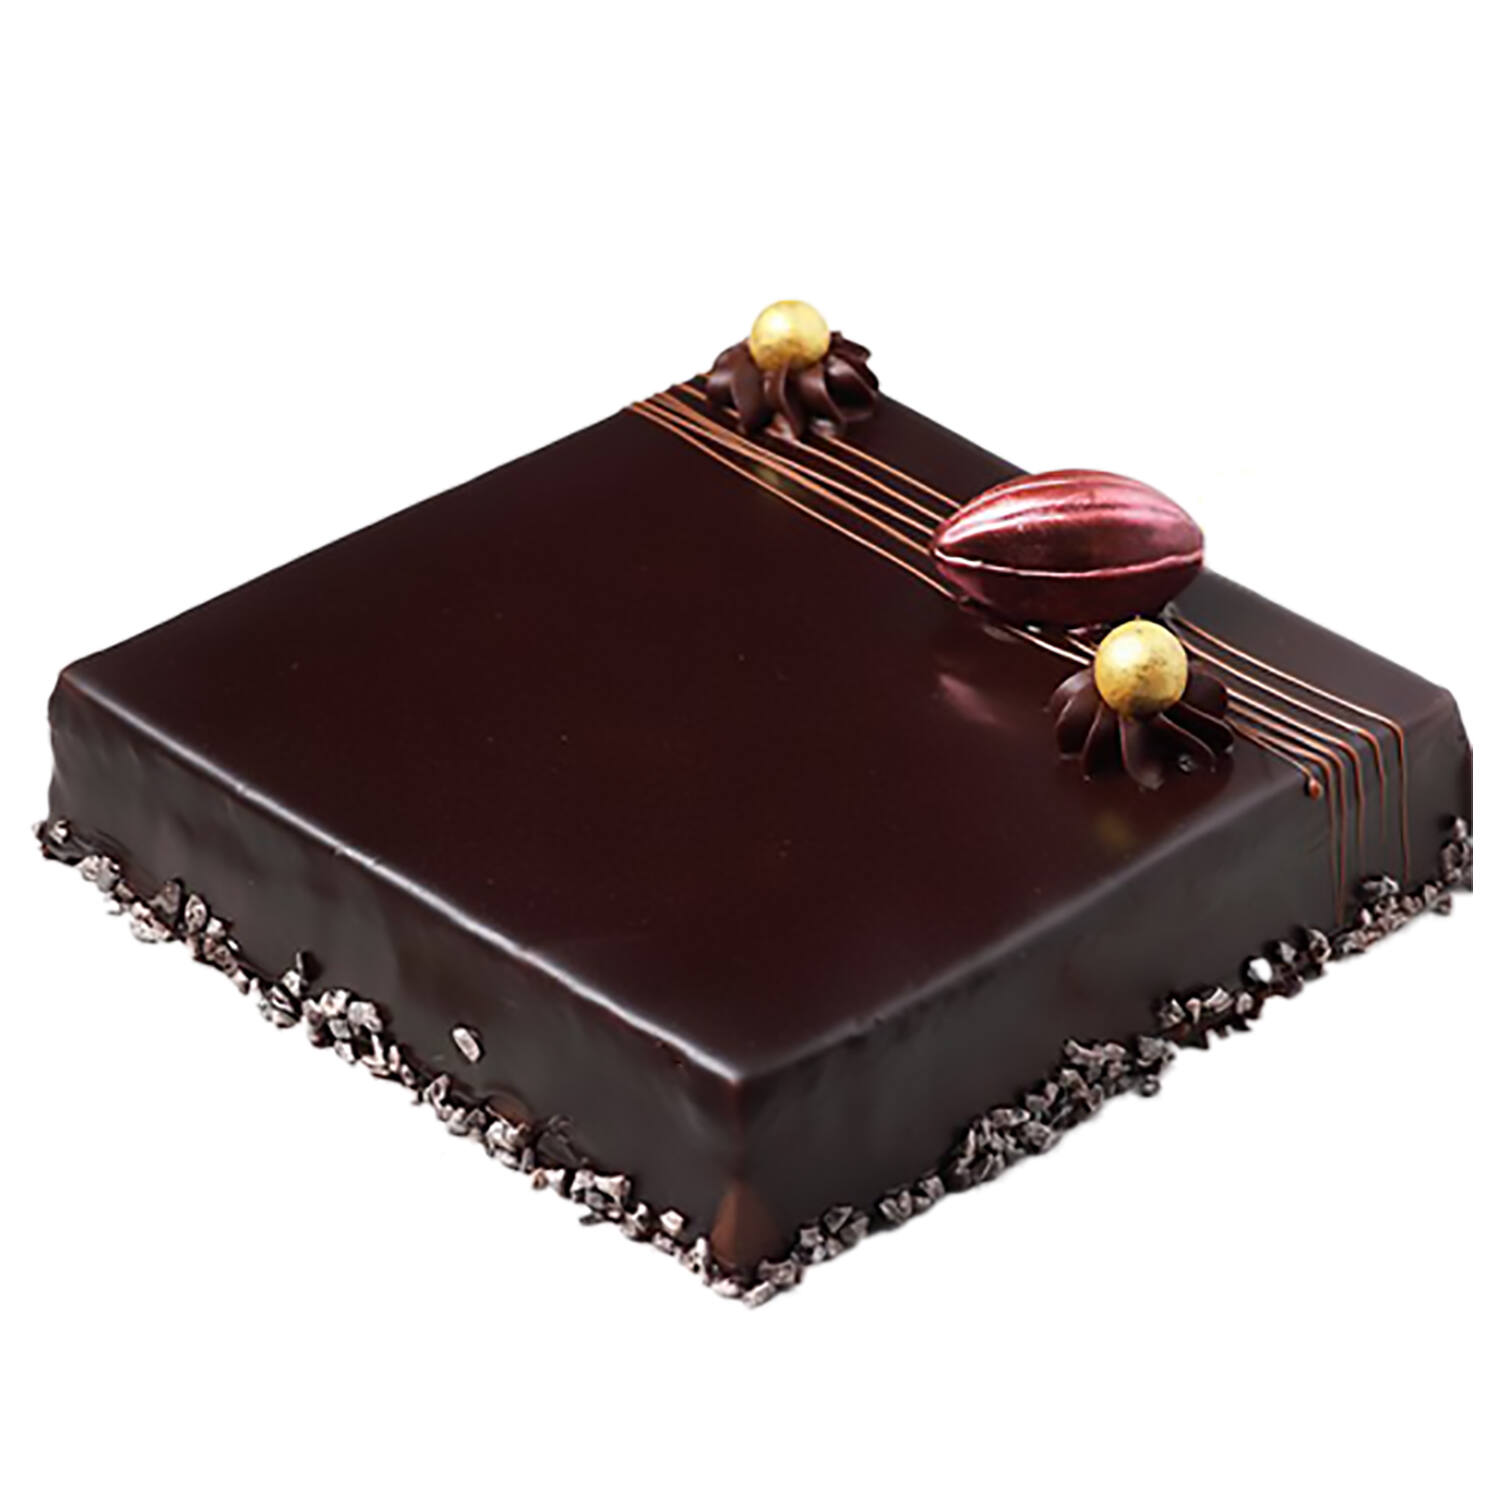 Order Online AT Chocolate Cake in Gurgaon Anytimecake 